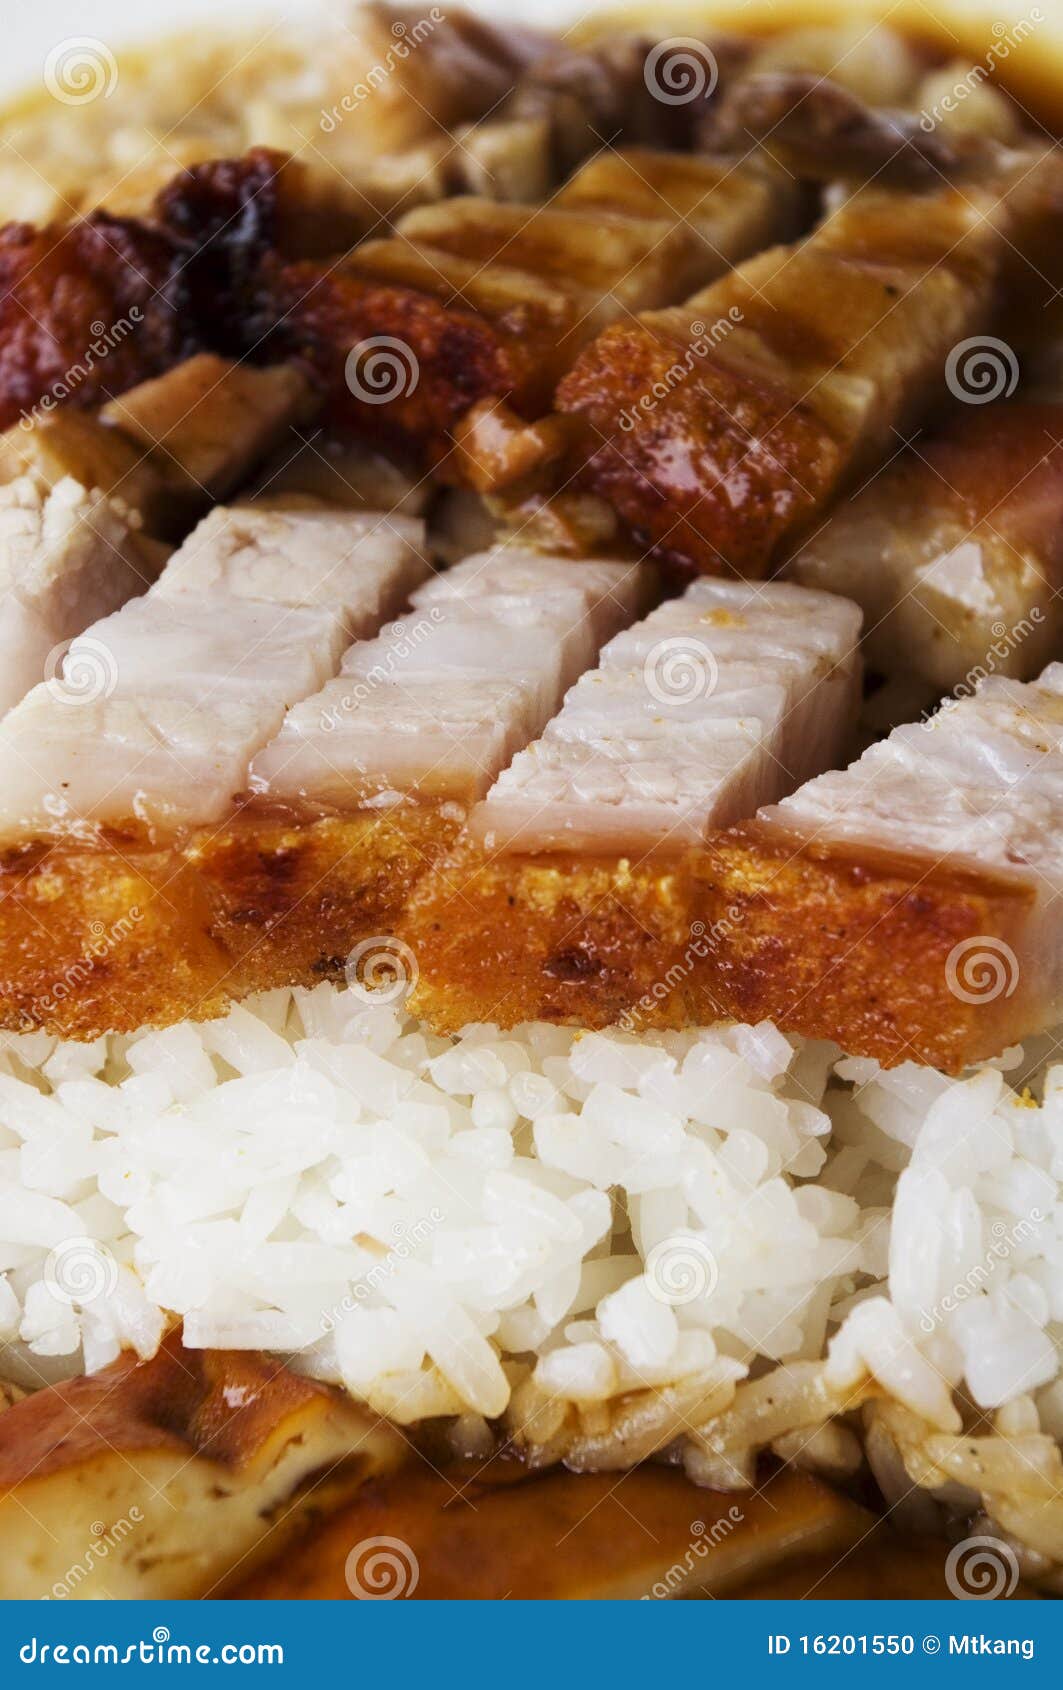 Roasted pork rice stock photo. Image of cuisine, gourmet - 16201550